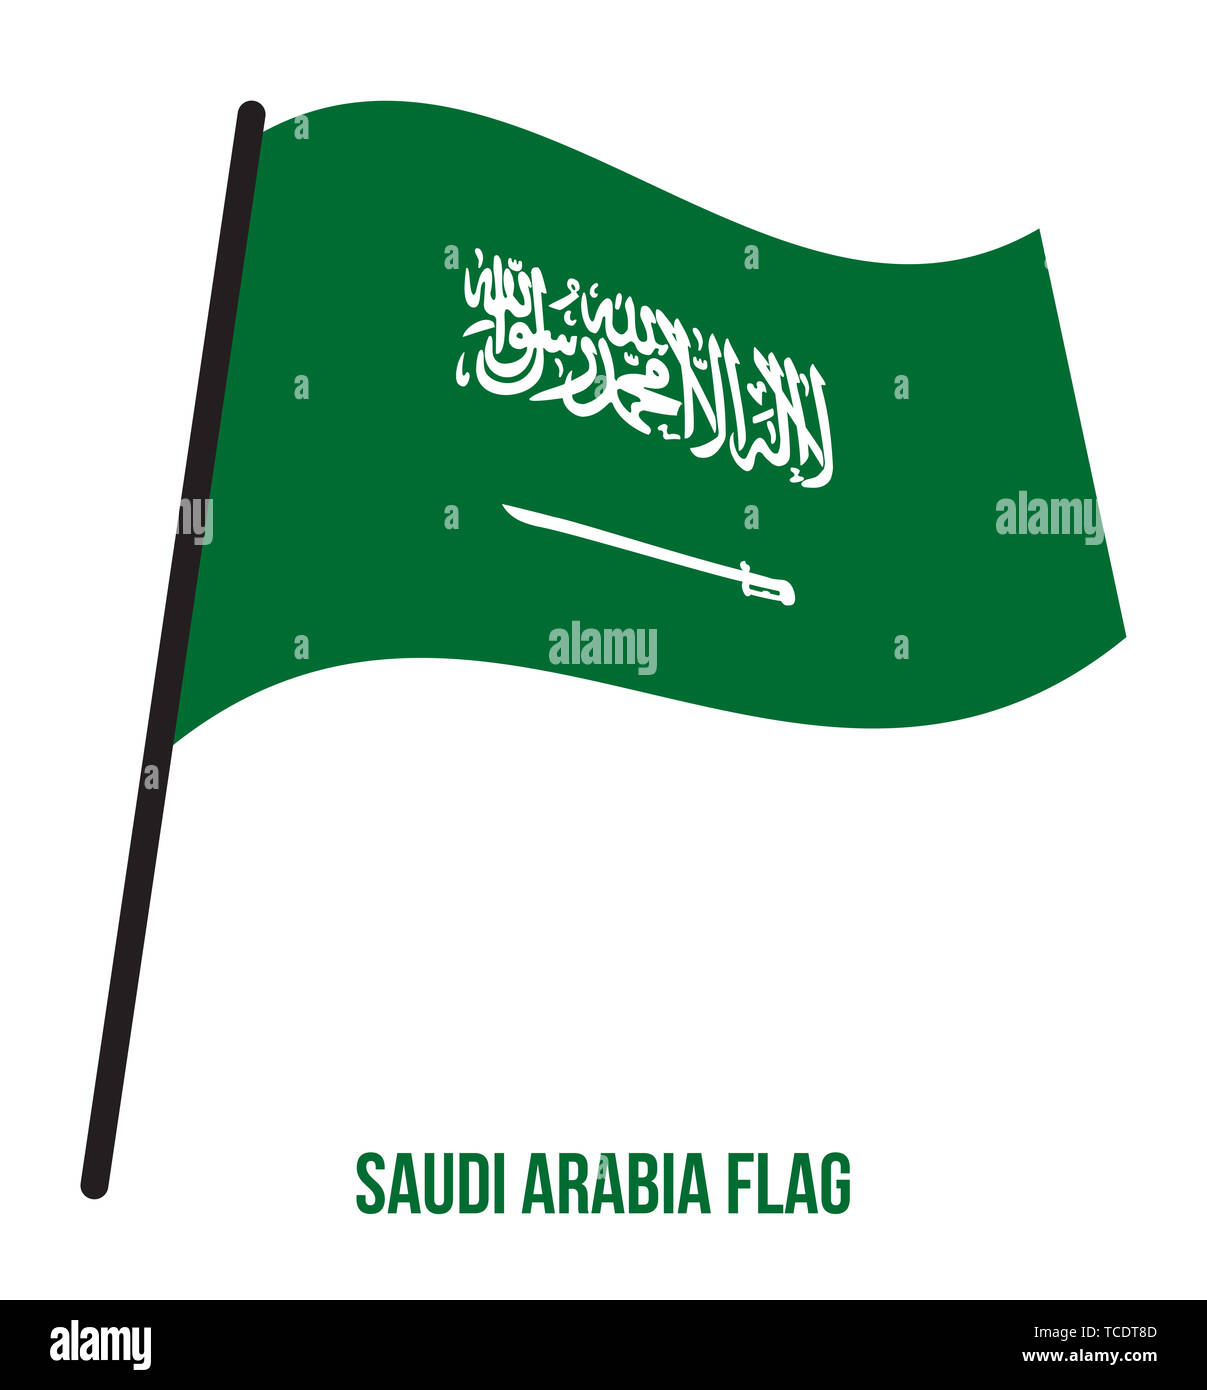 Saudi Arabia Flag Waving Vector Illustration on White Background. Saudi Arabia National Flag. Stock Photo